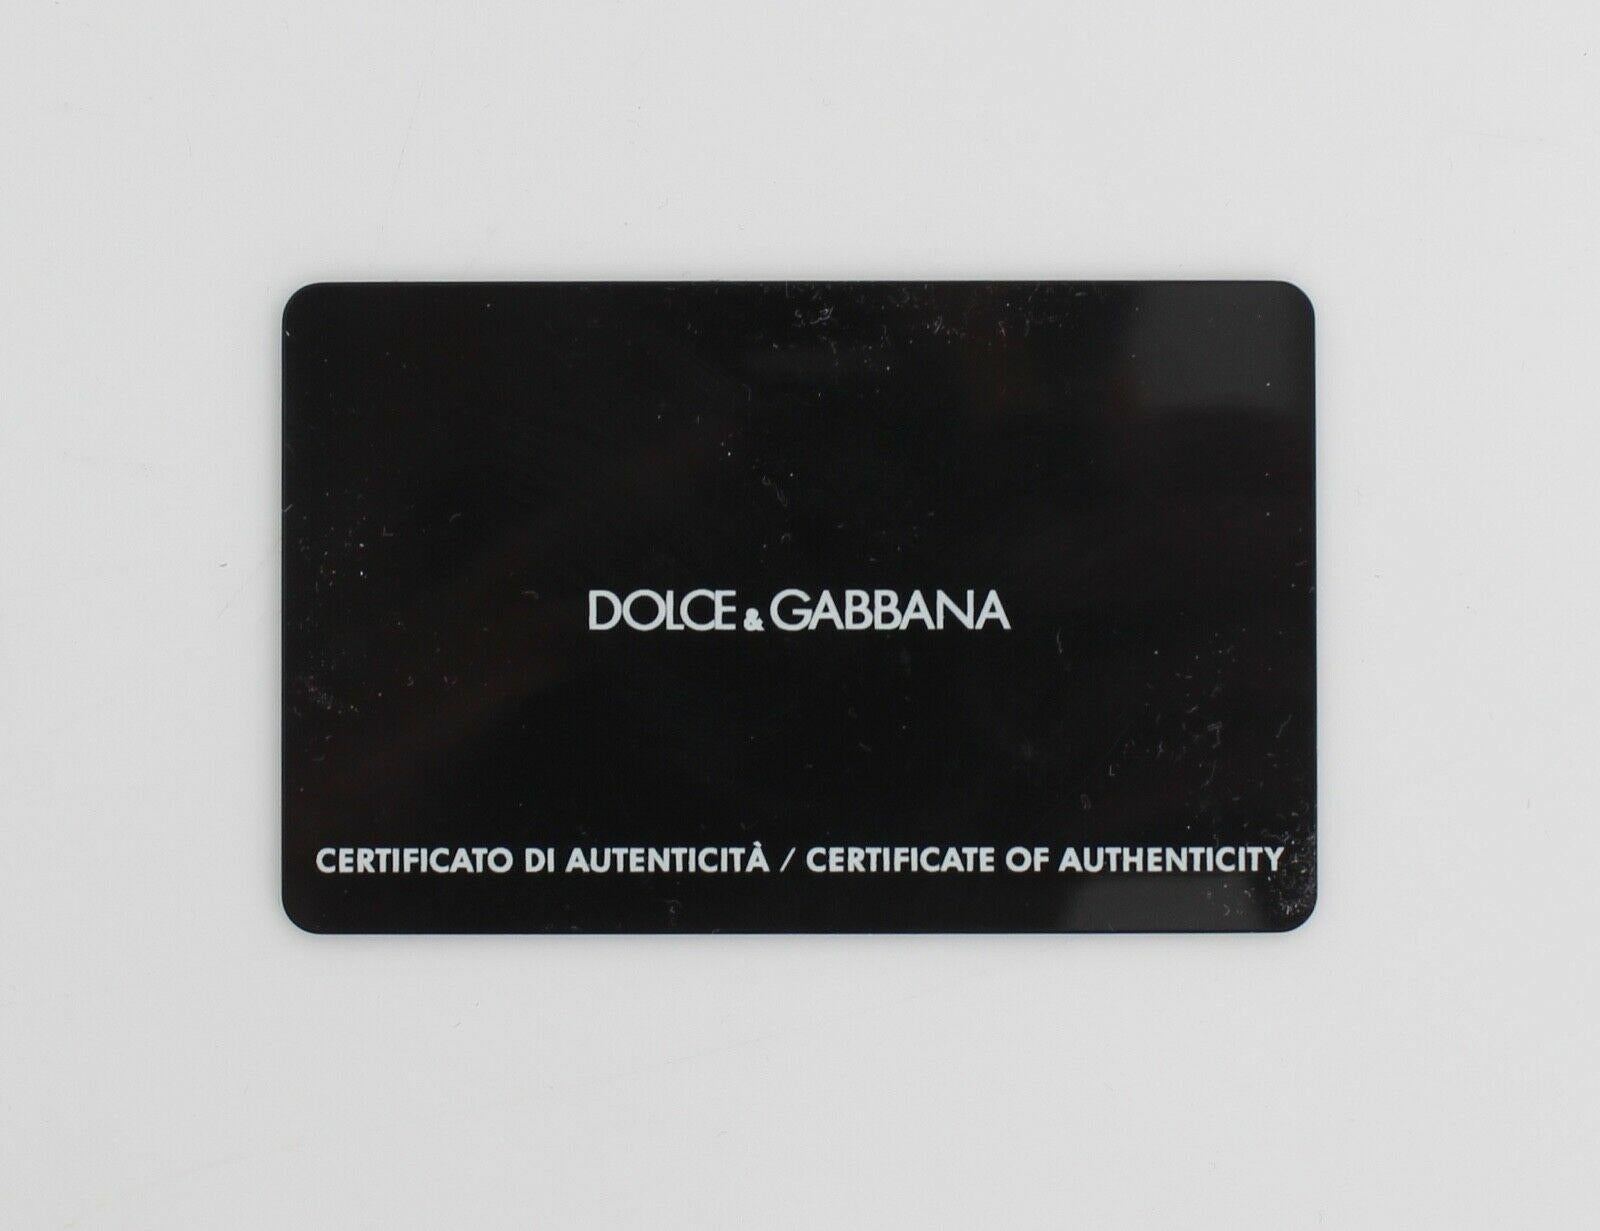 Dolce & Gabbana Black Leather Shopping Tote Bag Handbag Top Handle Bag 5